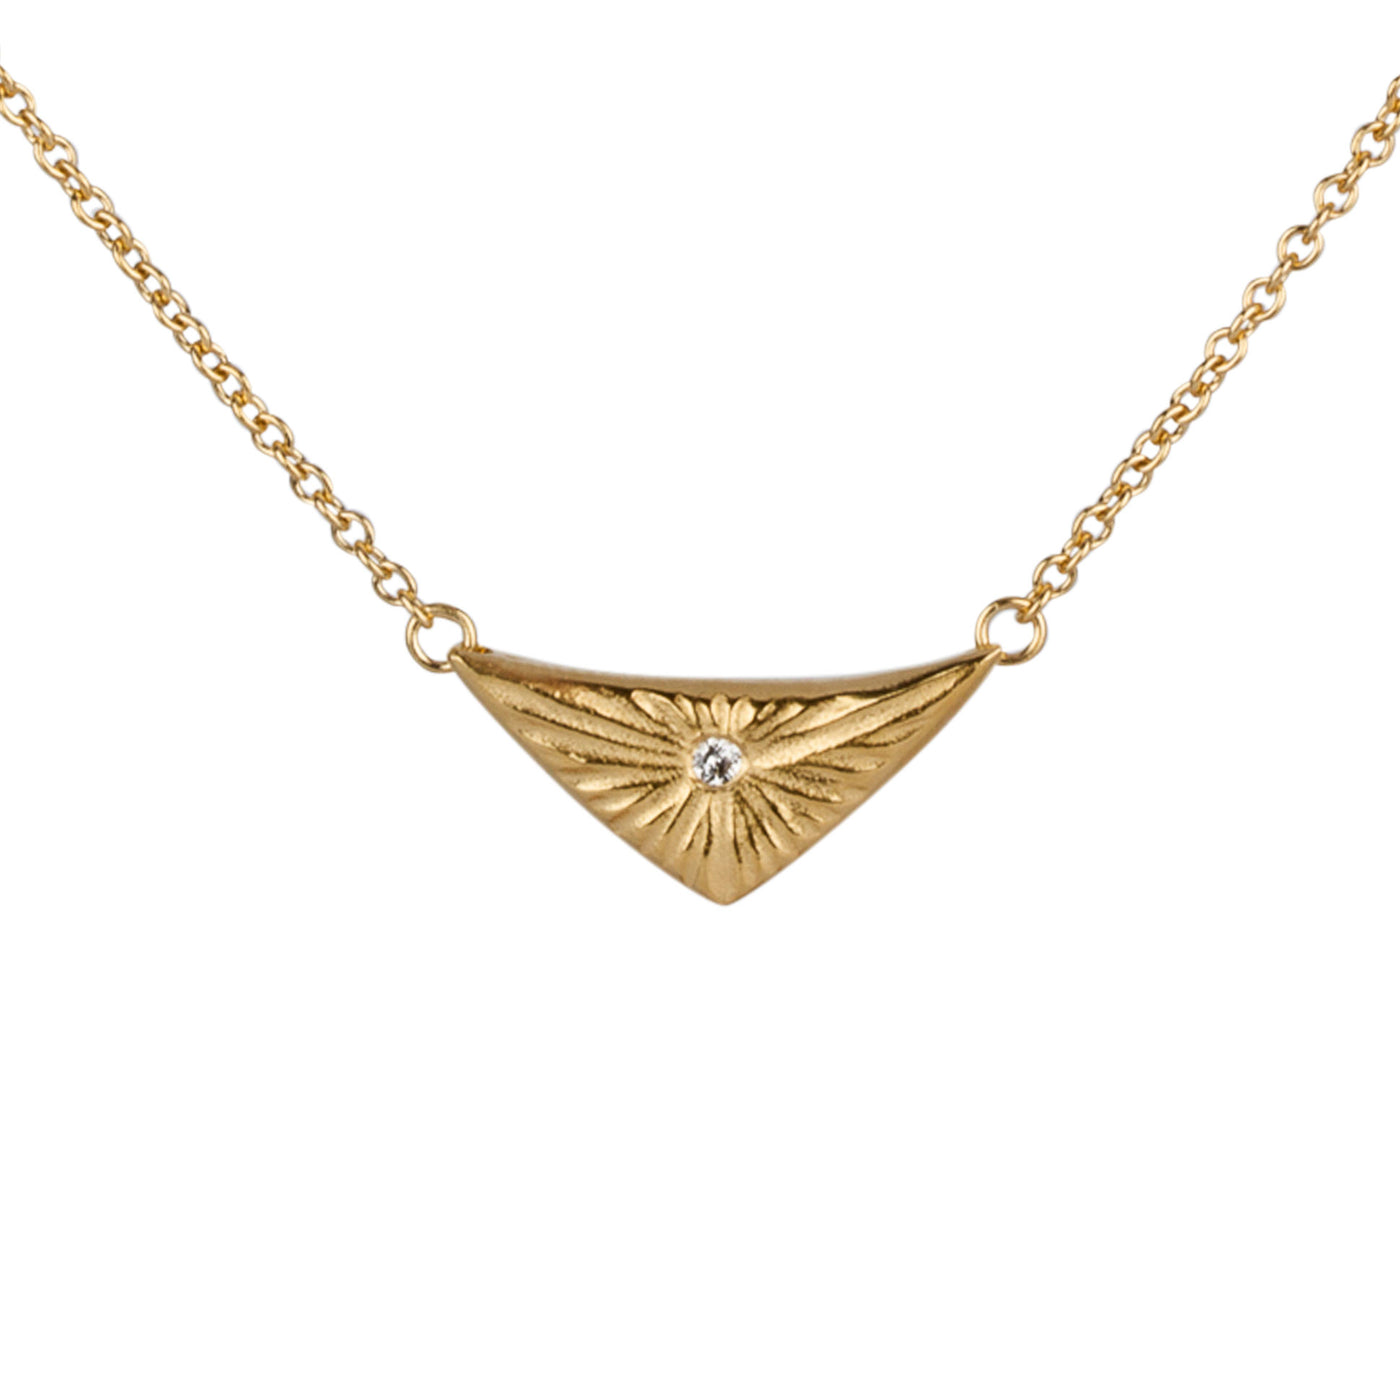 Flash triangular carved sunburst Vermeil Necklace with a diamond center on a white background by Corey Egan